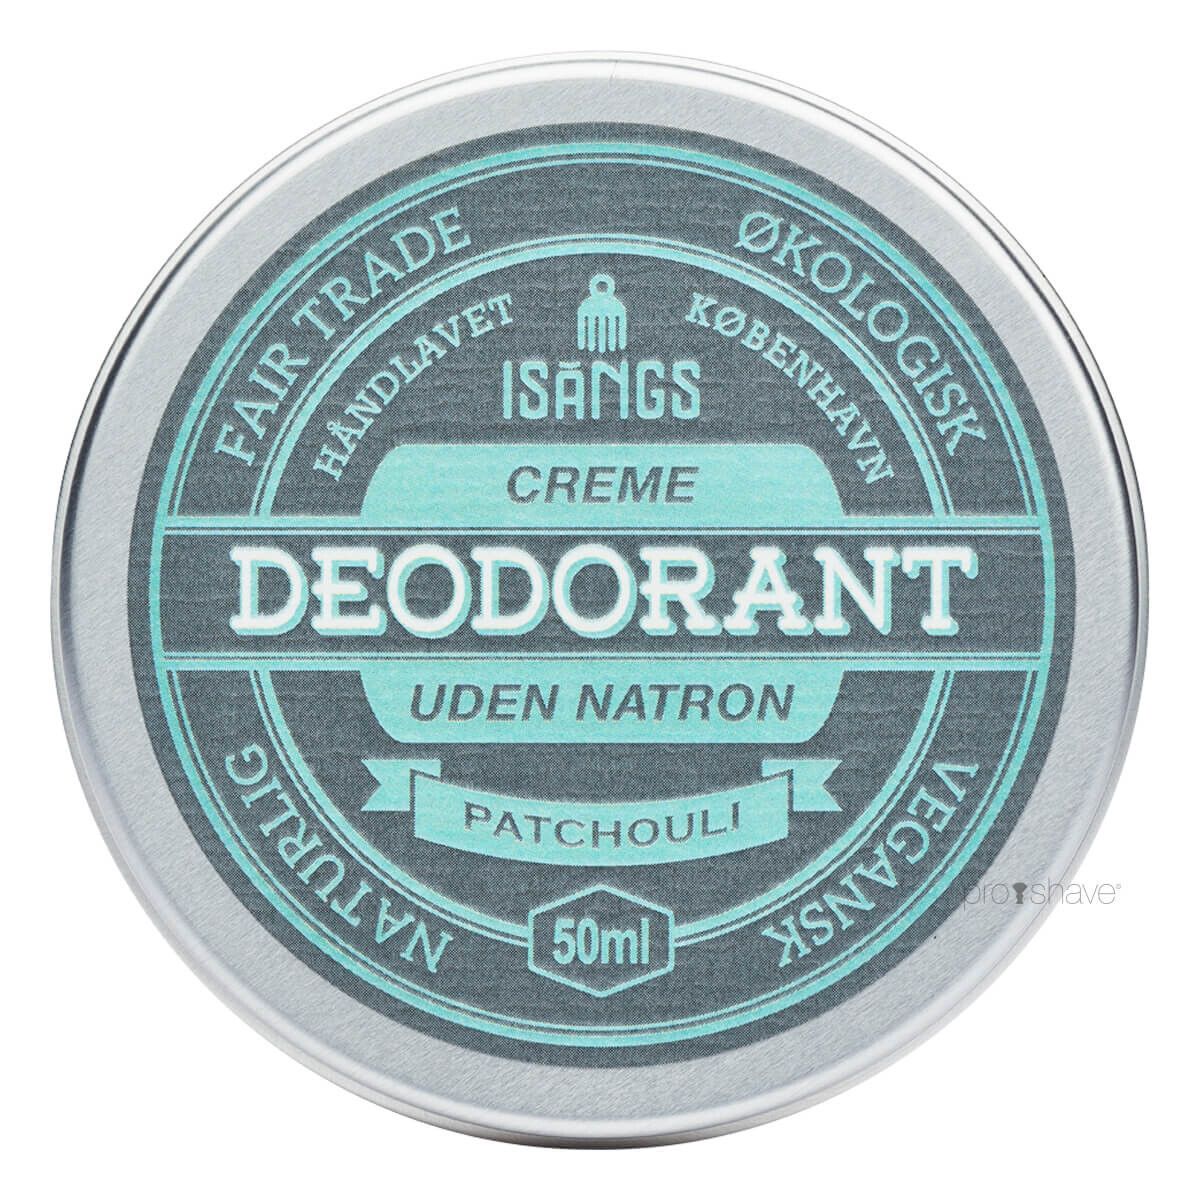 Se Isangs Creme Deodorant uden Natron, Patchouli, 50 ml. hos Proshave